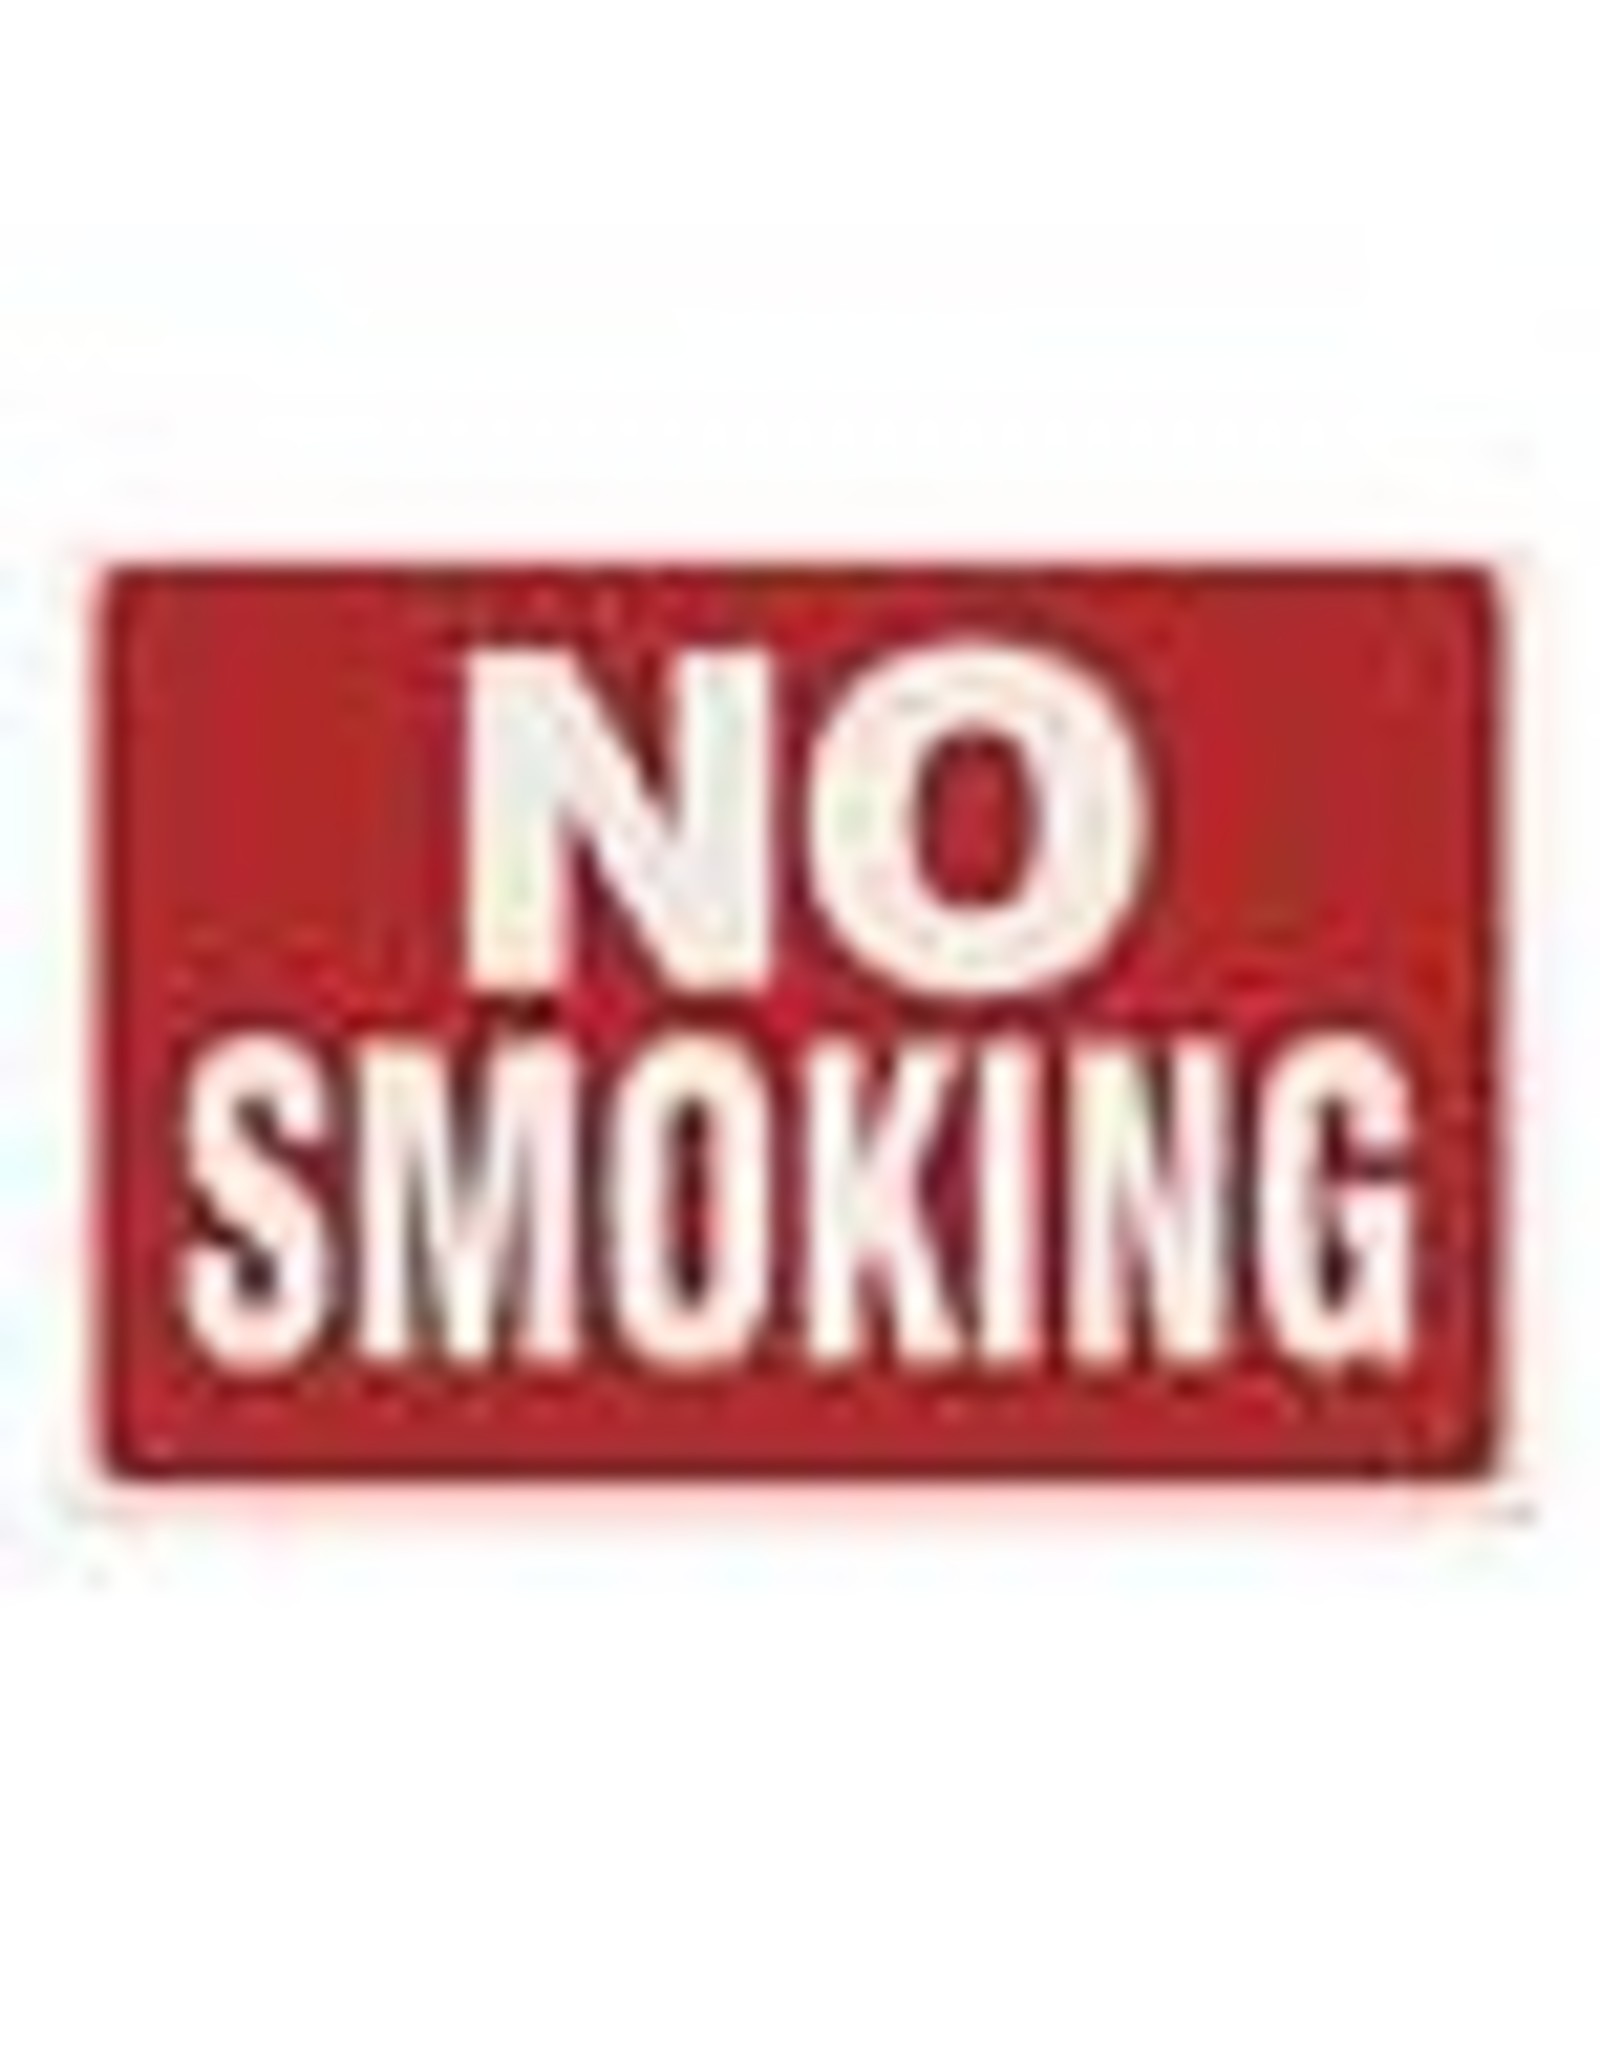 SIGN 12x8 RD/WT*NO SMOKING